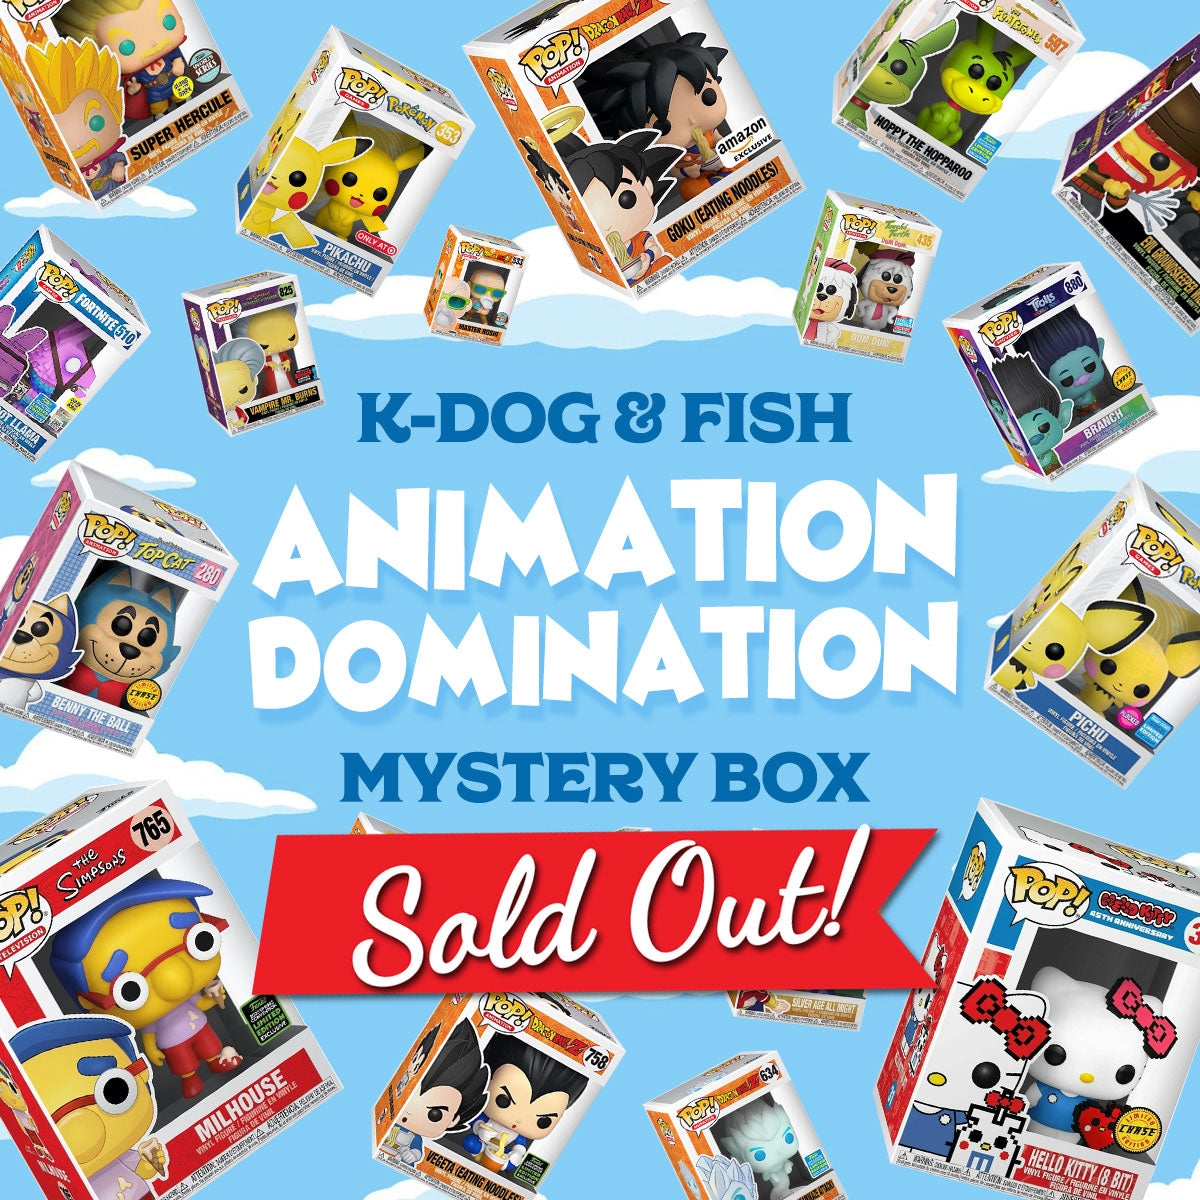 K-DOG & FISH: ANIMATION DOMINATION MYSTERY BOX (SOLD OUT) - K-Dog & Fish